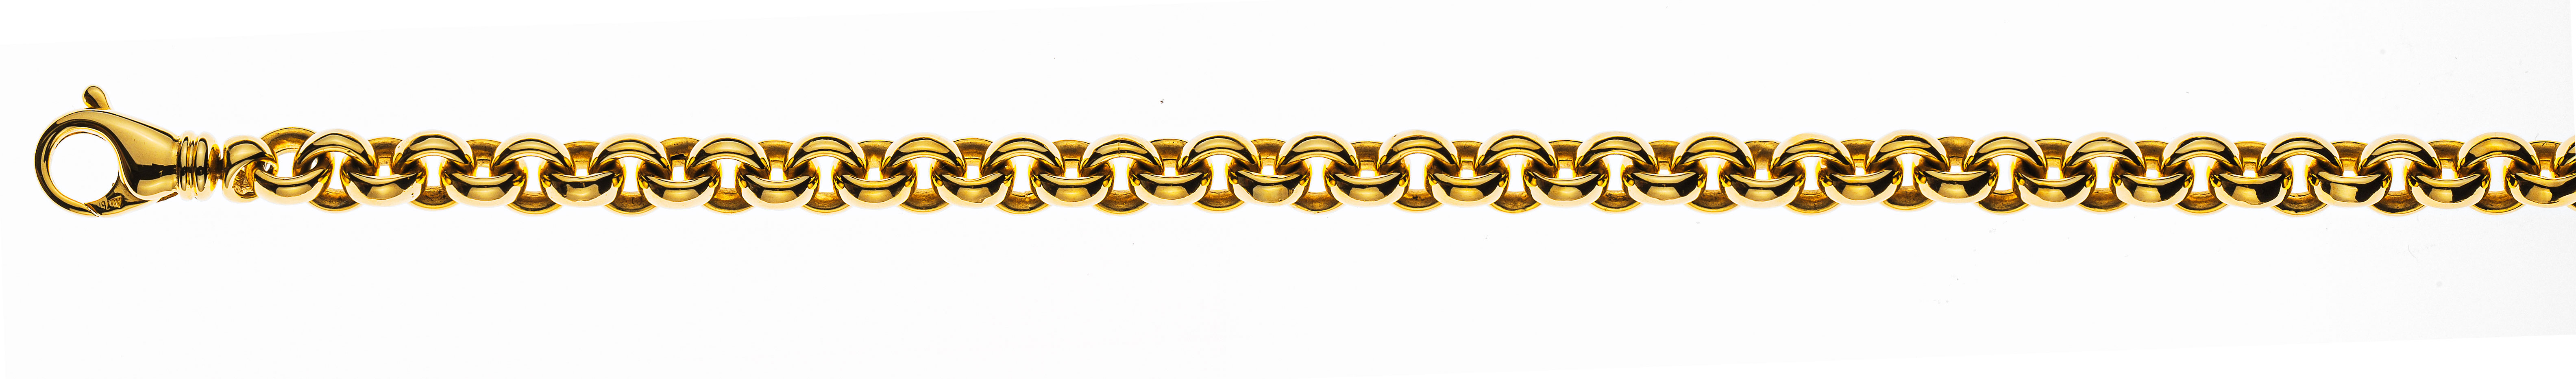 AURONOS Prestige Necklace yellow gold 18K handmade pea chain 45cm 6.5mm